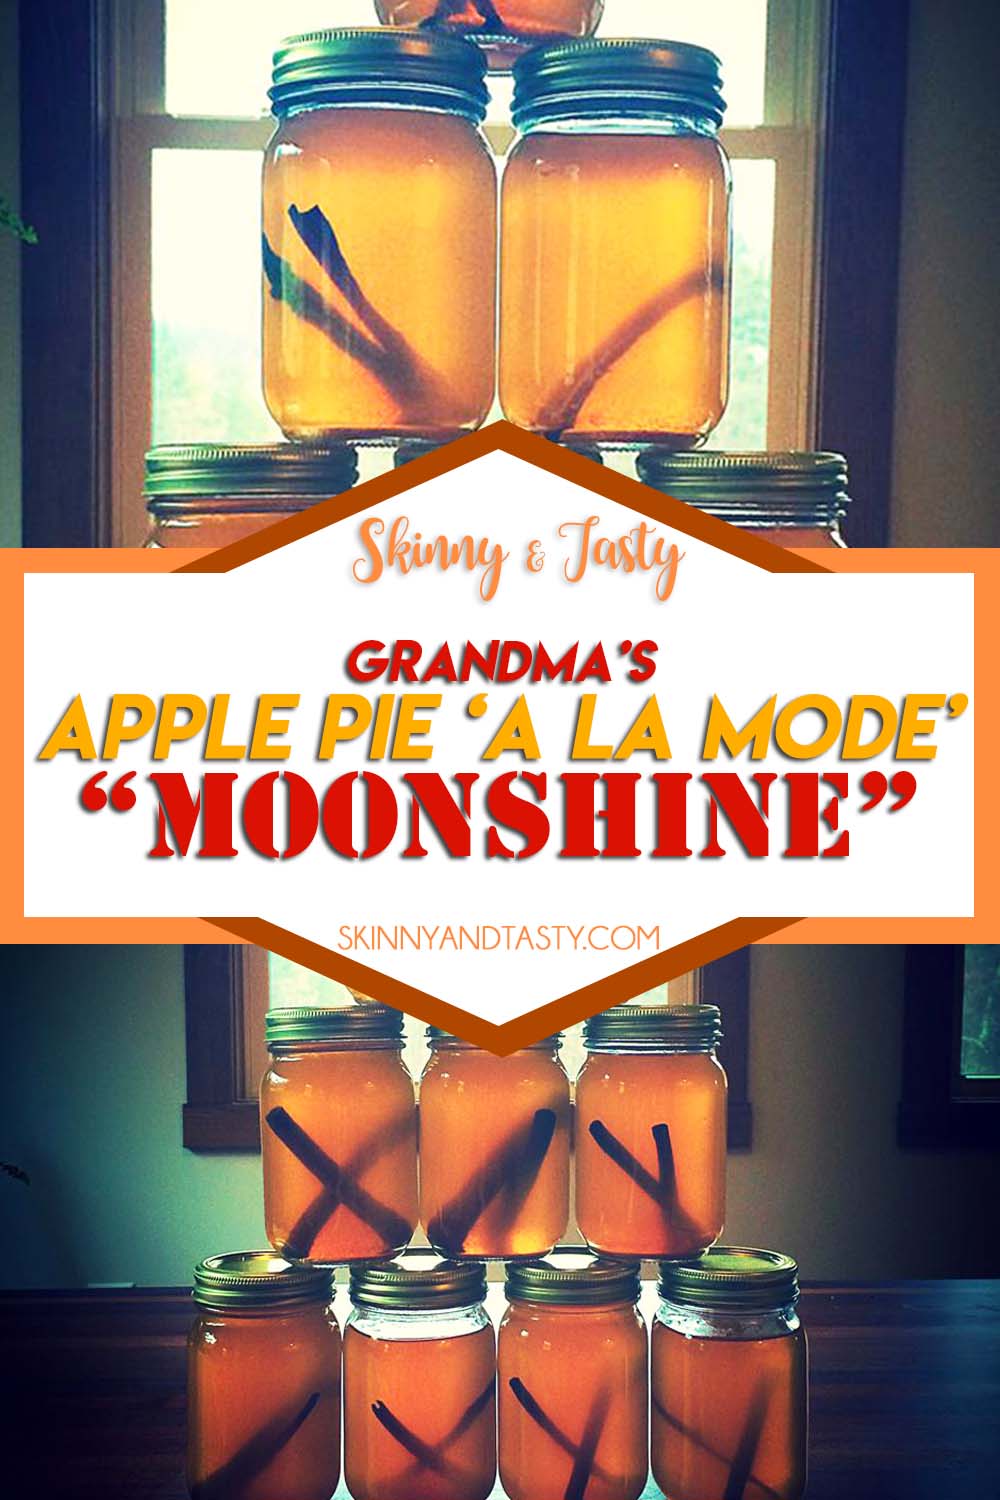 Apple Pie 'A La Mode' "Moonshine" Recipe